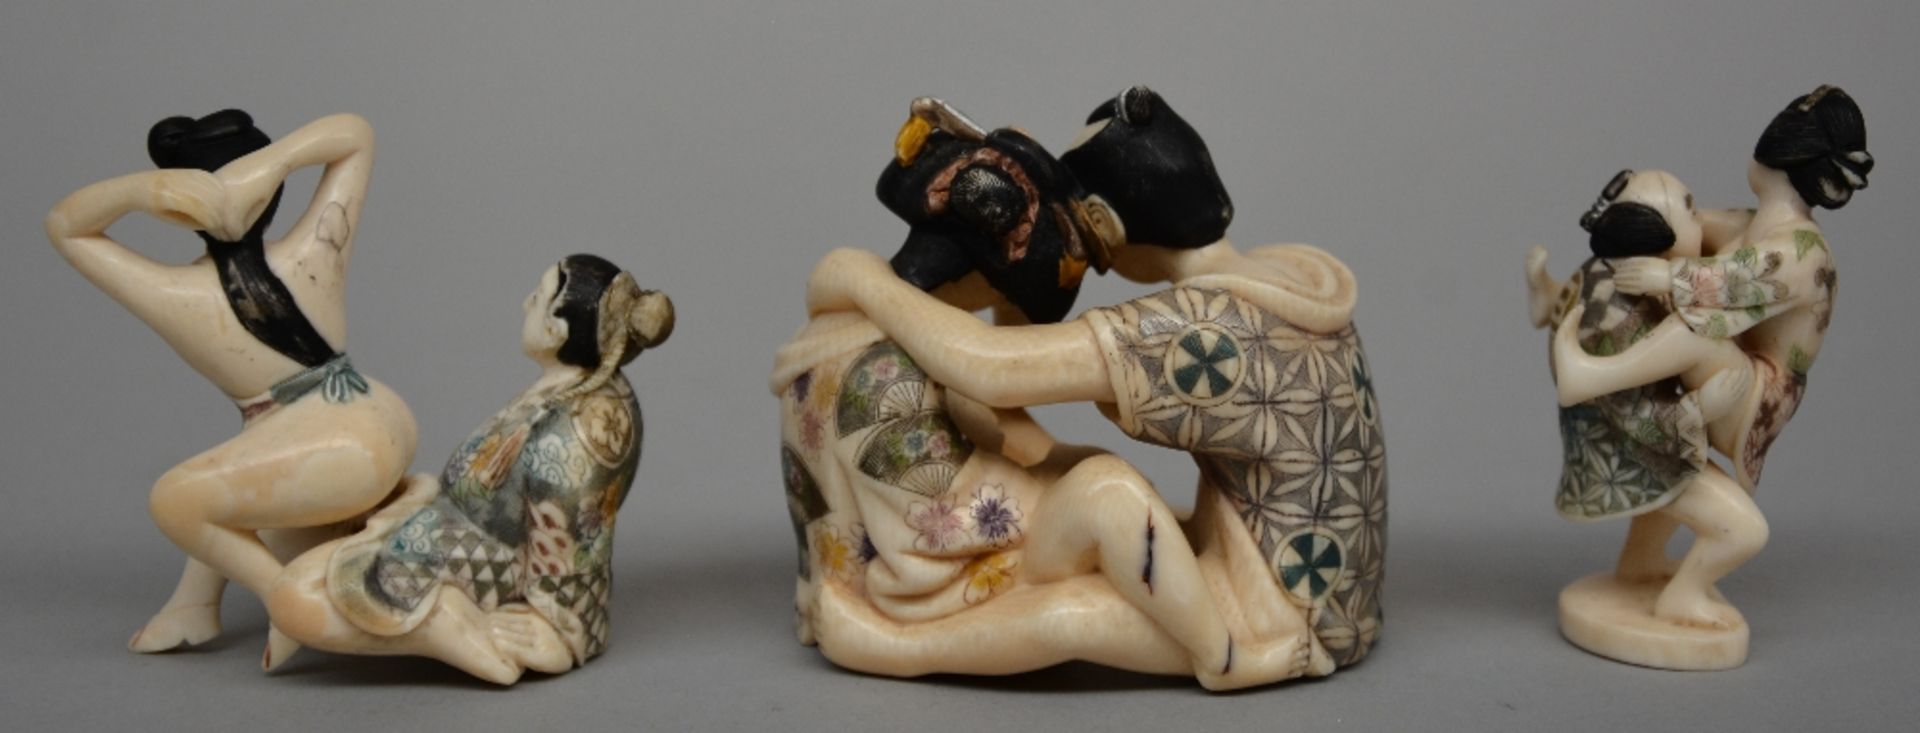 Five ivory erotic sculptures, Japanese style, scrimshaw decorated, first half of 20thC, H 3 - 7 - Bild 4 aus 10